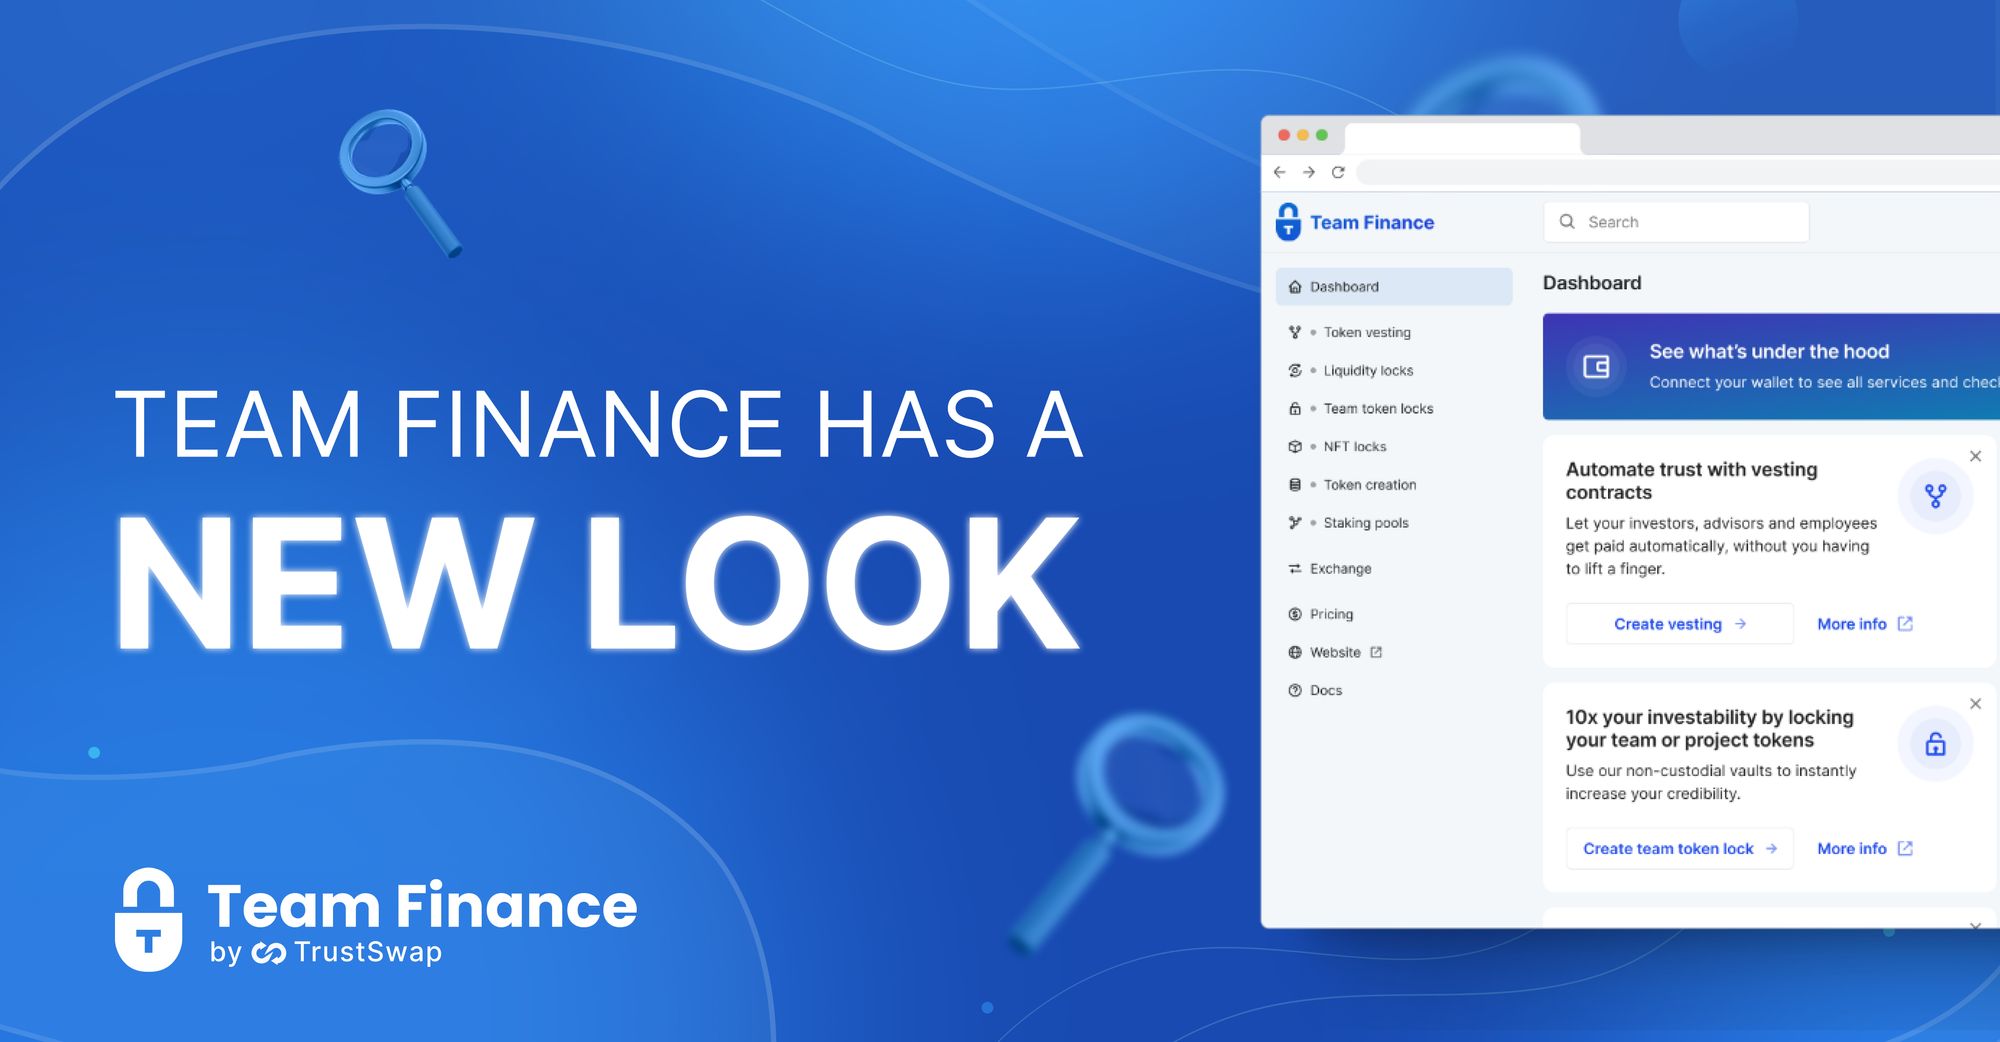 Team Finance App Has A New Look